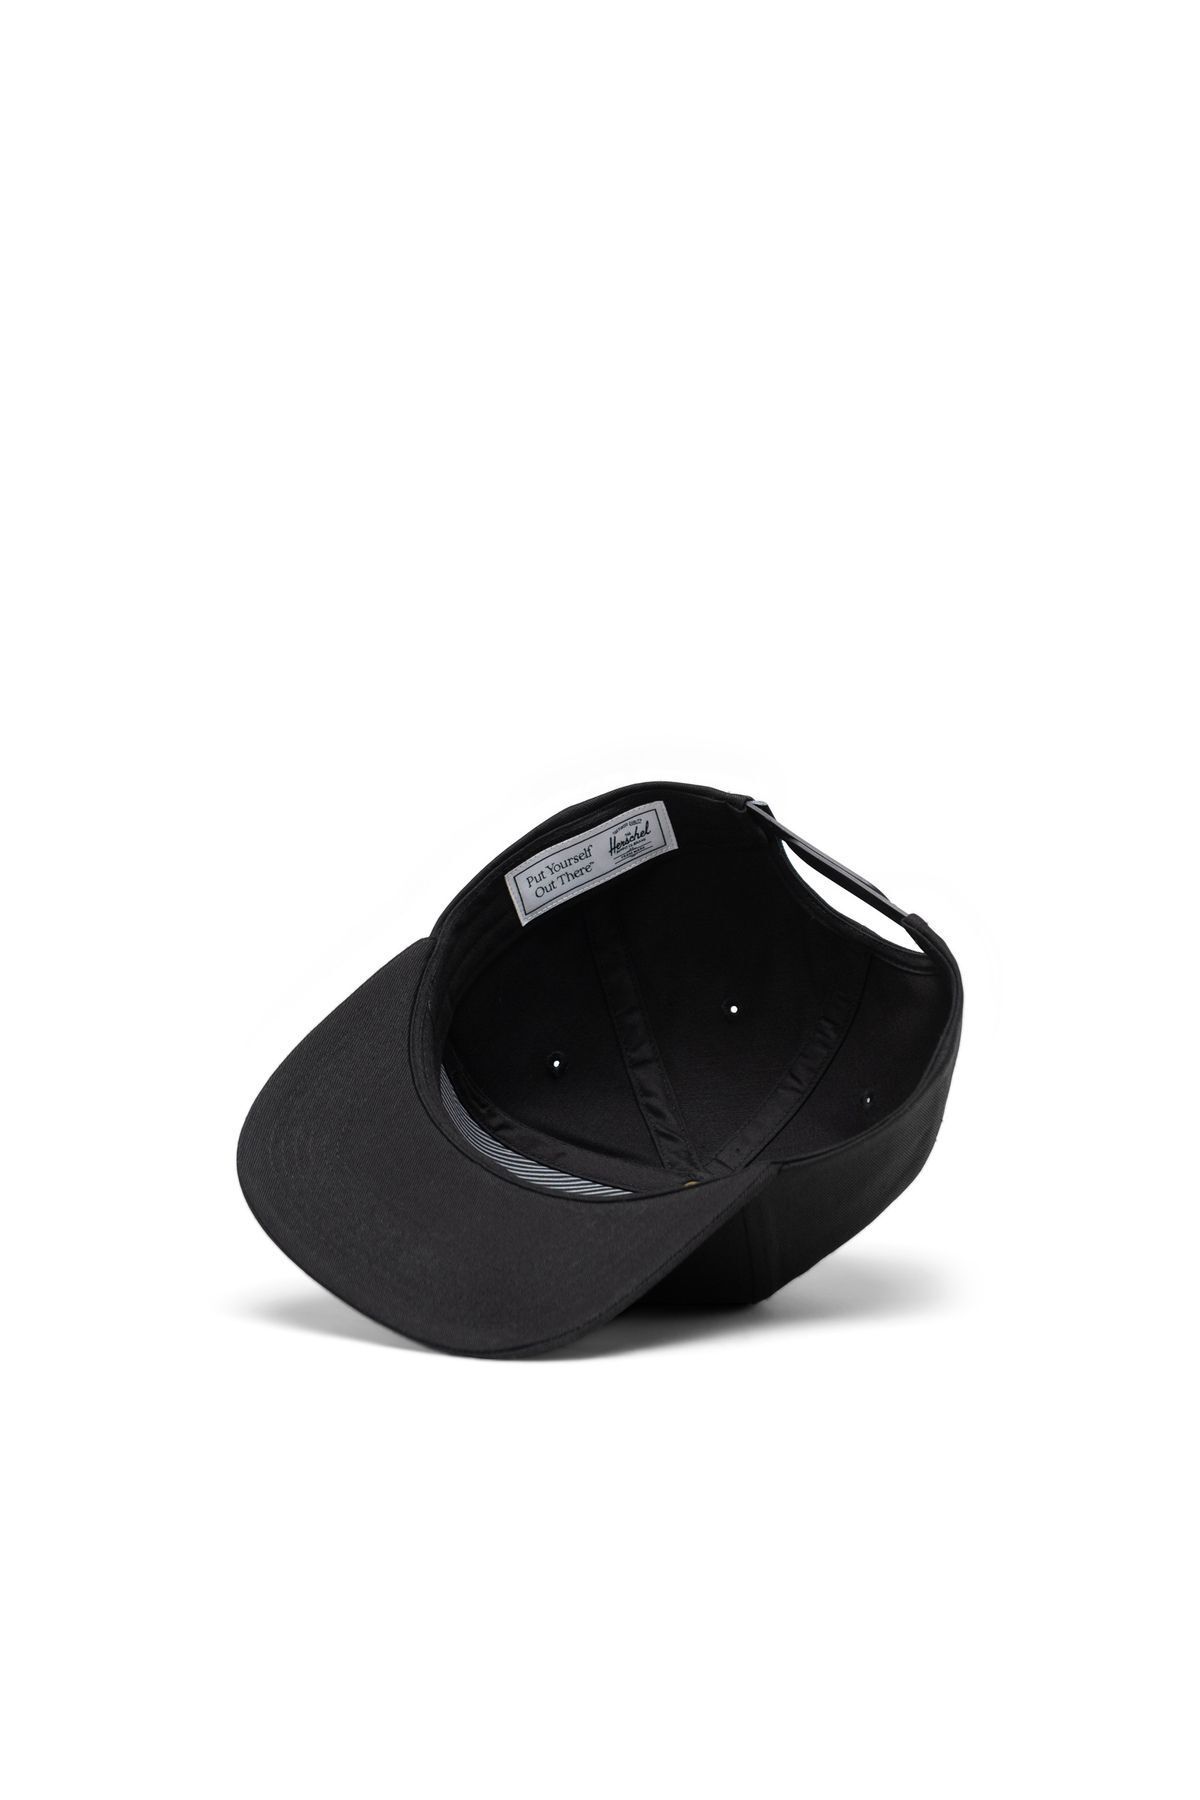 Herschel Whaler Amblemli Cap Şapka